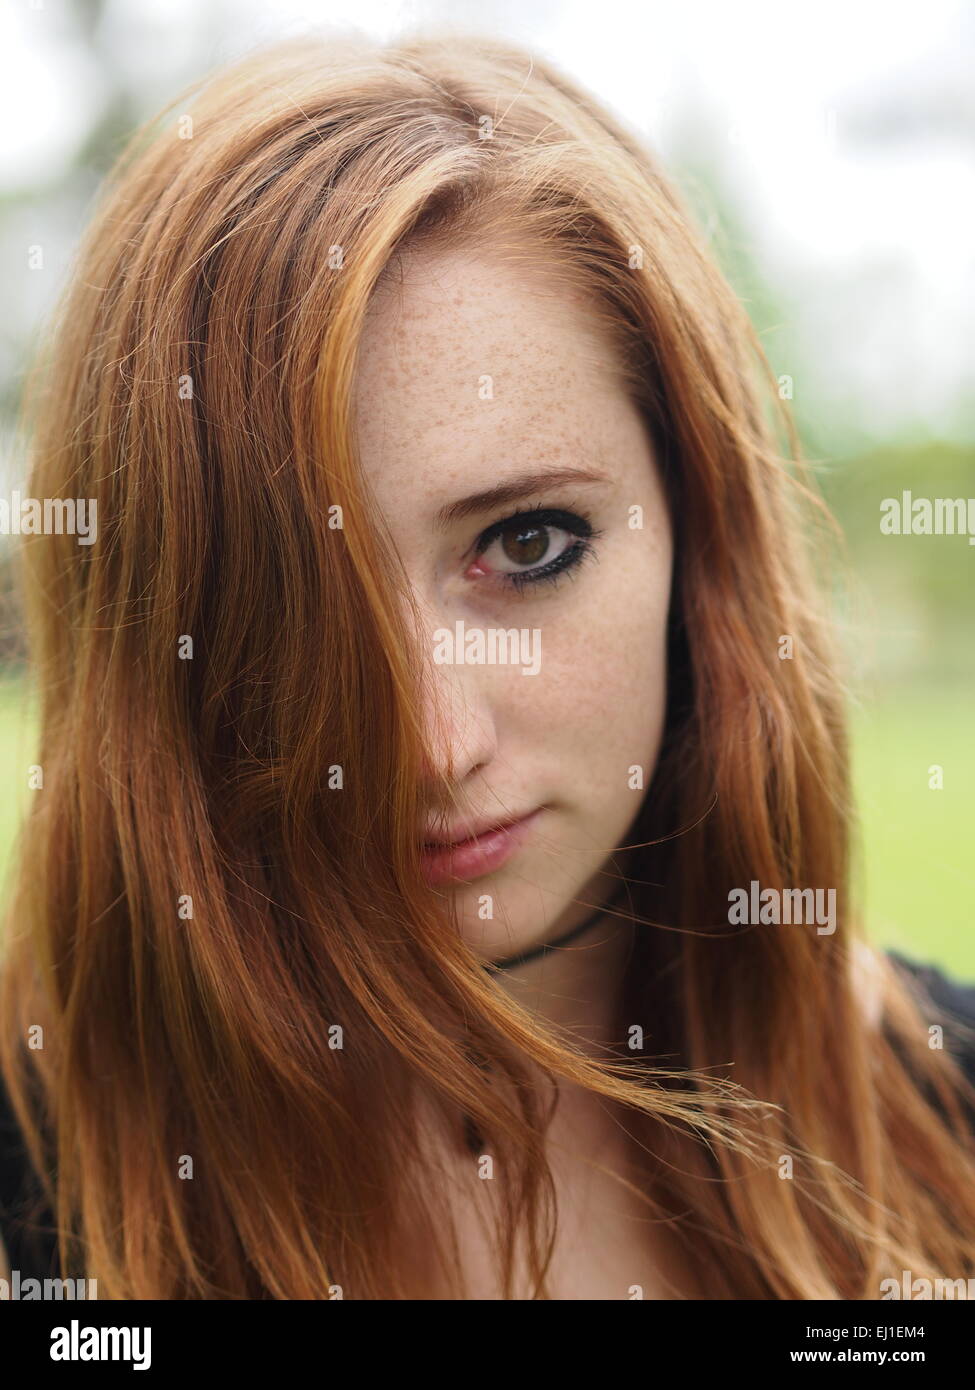 Red hair girl portrait Stock Photo